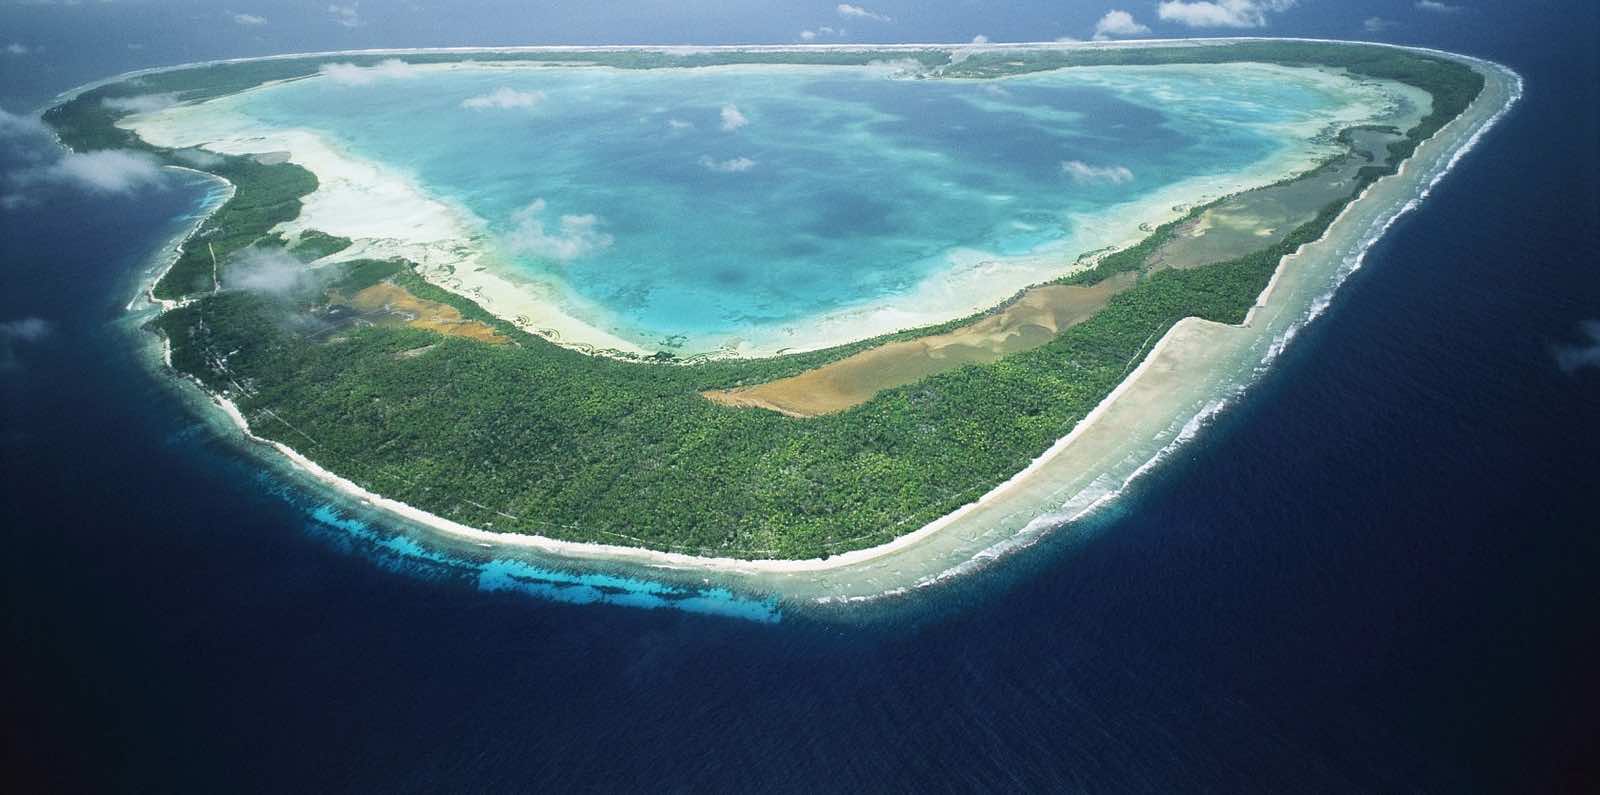 Gilbert Islands, Kiribati (Photo: Charly W. Karl/Flickr)